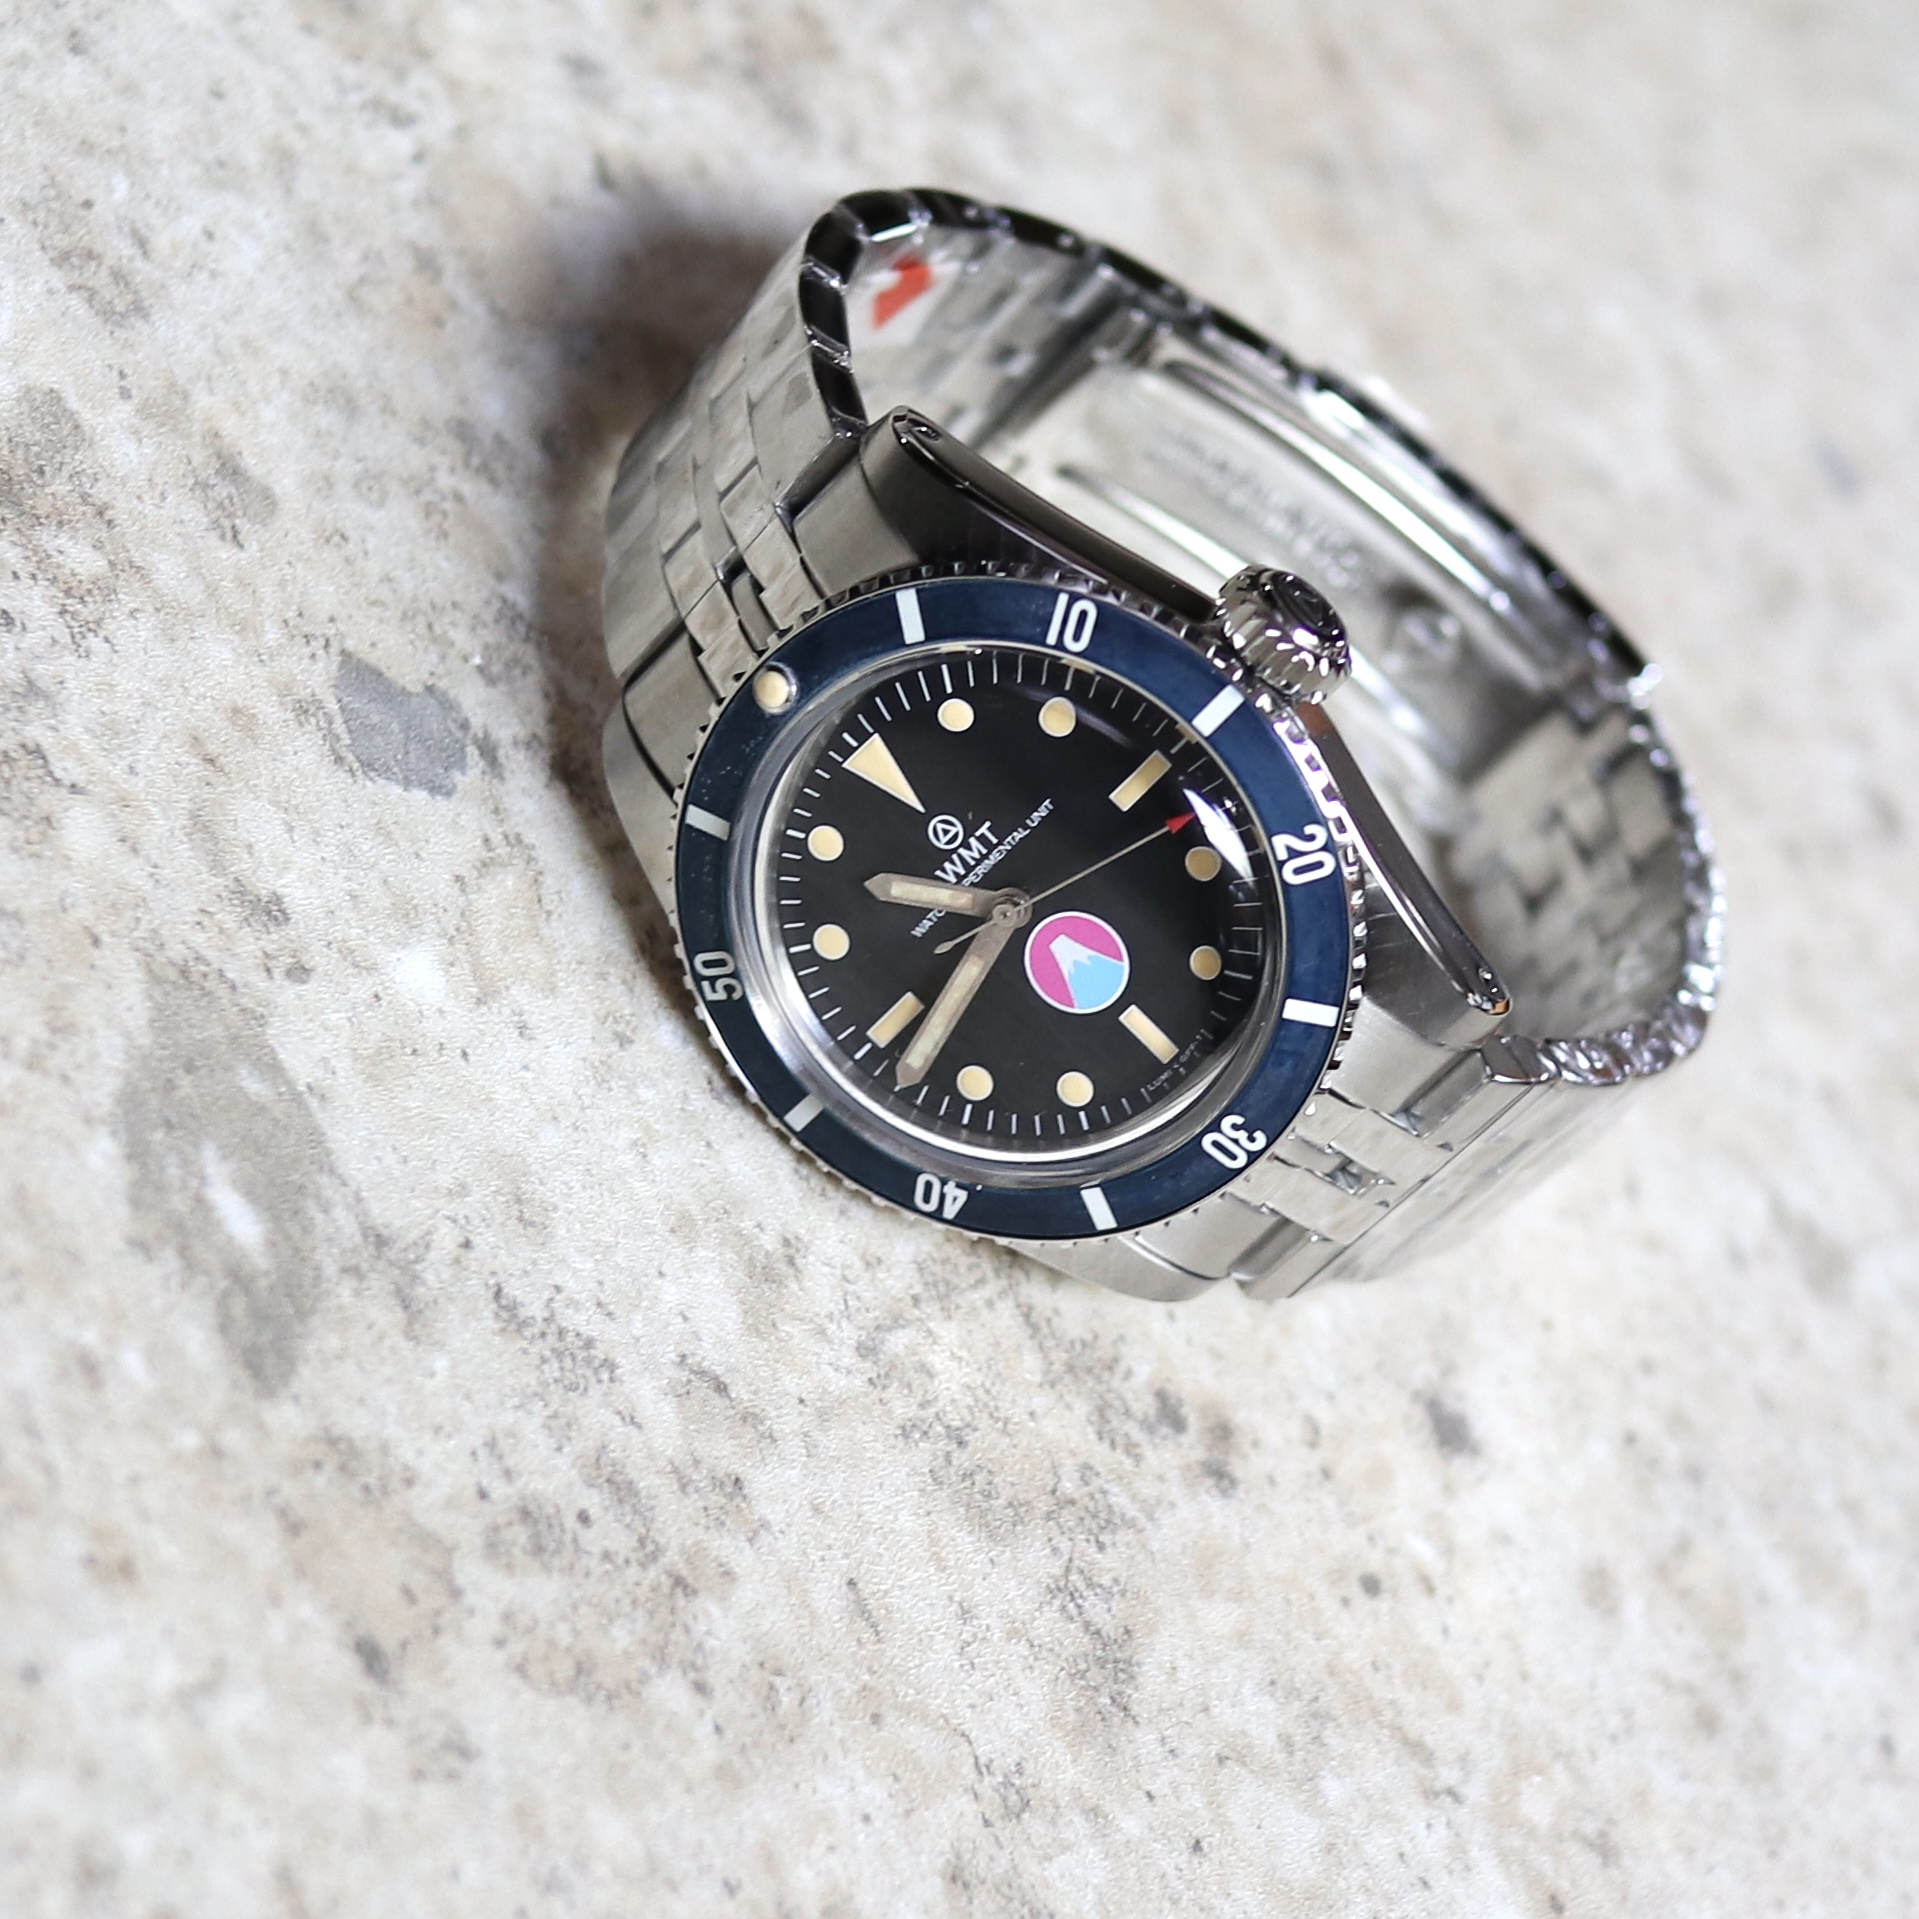 【WMT WATCH】 MT.Fuji / Navy Diver Aged / 5Links Bracelet 02 / 腕時計 メンズ おしゃれ ブランド 人気 30代 40代 50代画像